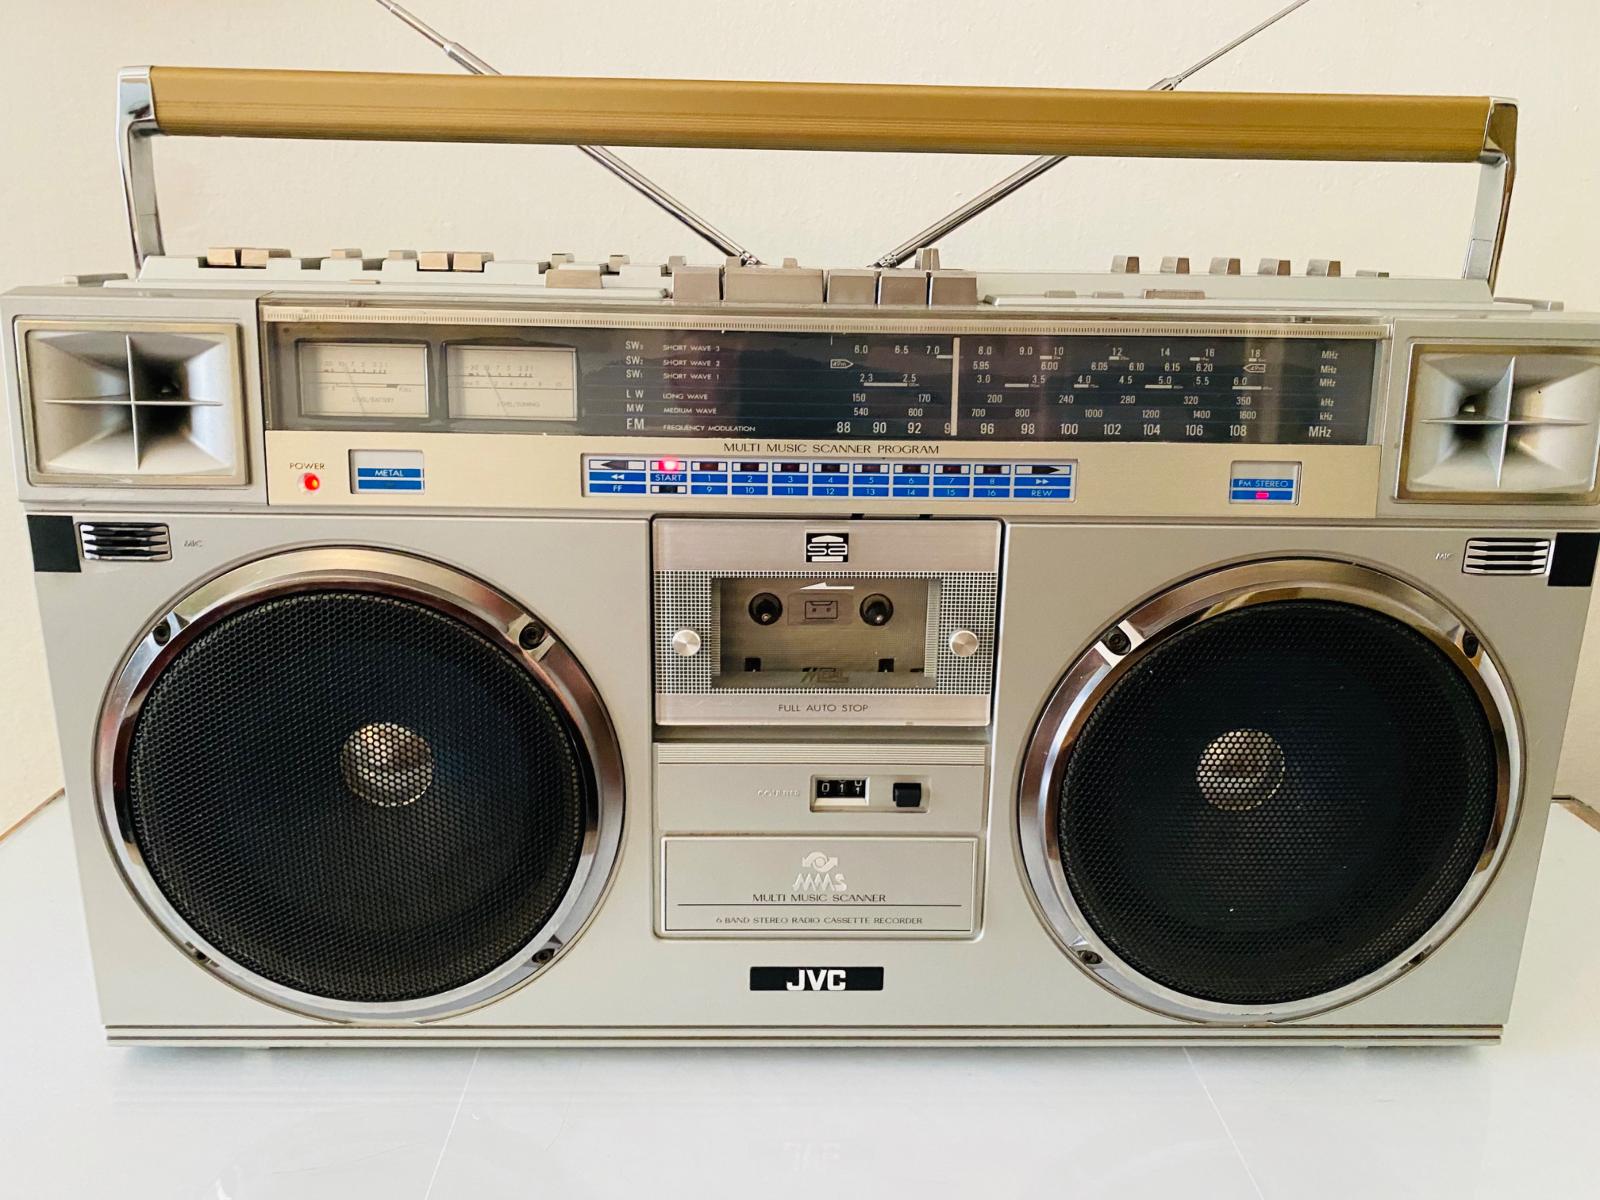 Rádiomagnetofón/boombox JVC RC-M70L, rok 1981 - TV, audio, video